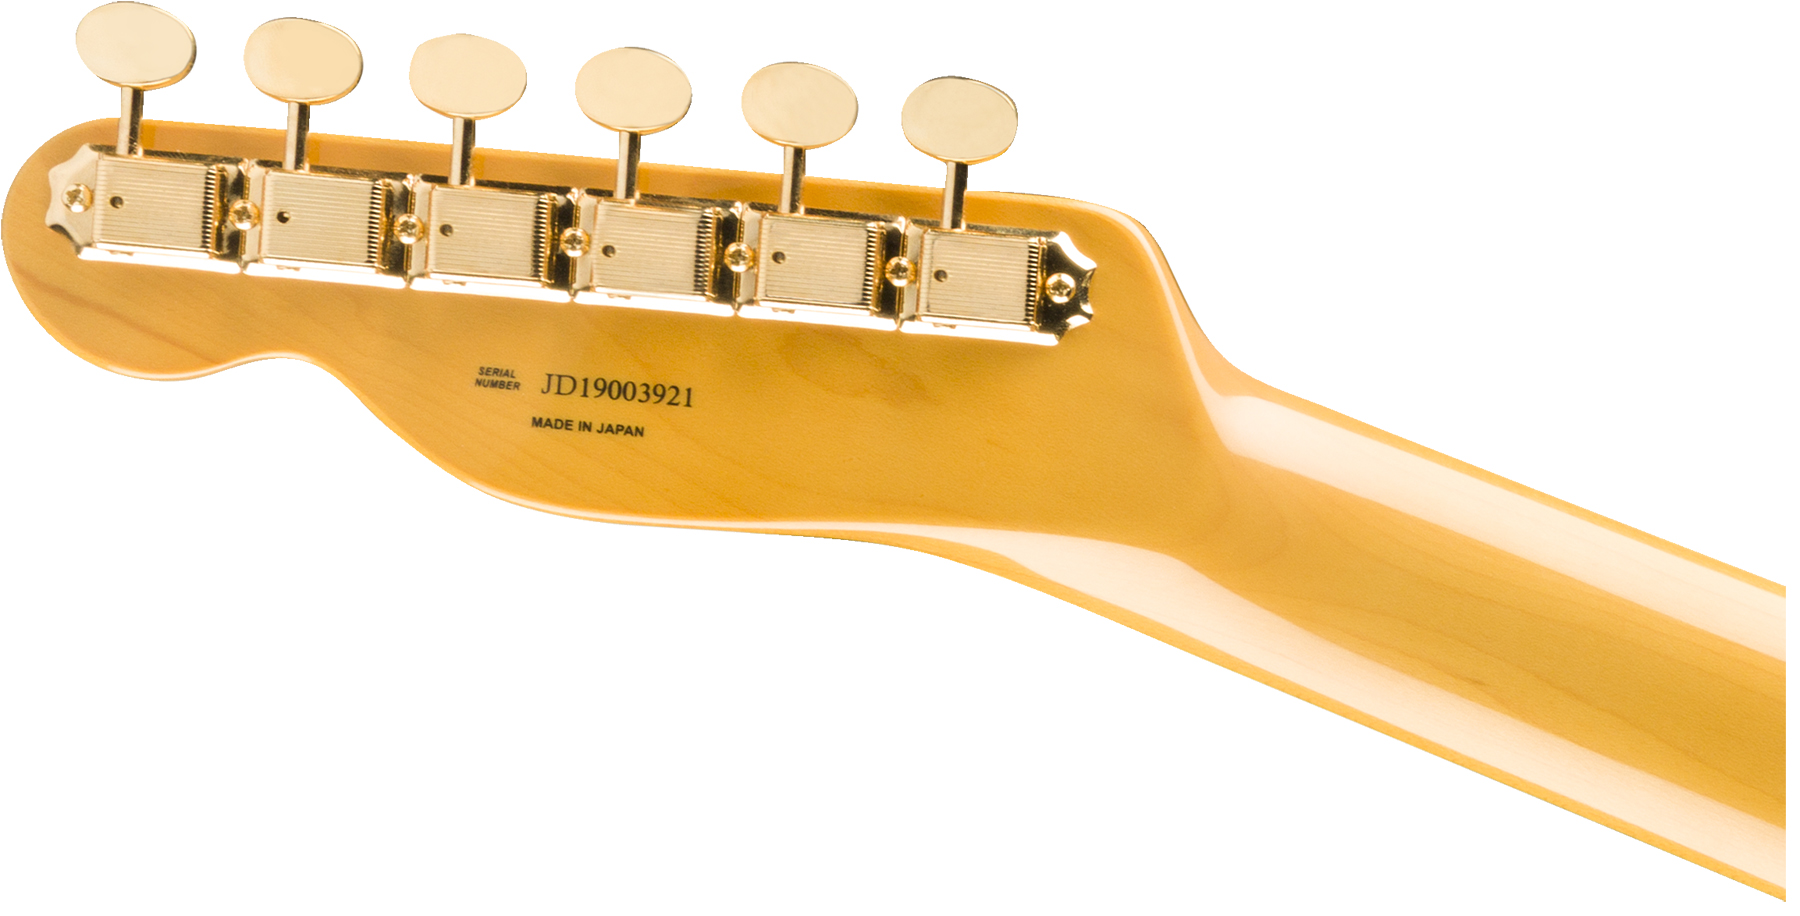 Fender Tele Daybreak Ltd 2019 Japon Gh Rw - Olympic White - Guitarra eléctrica con forma de tel - Variation 3